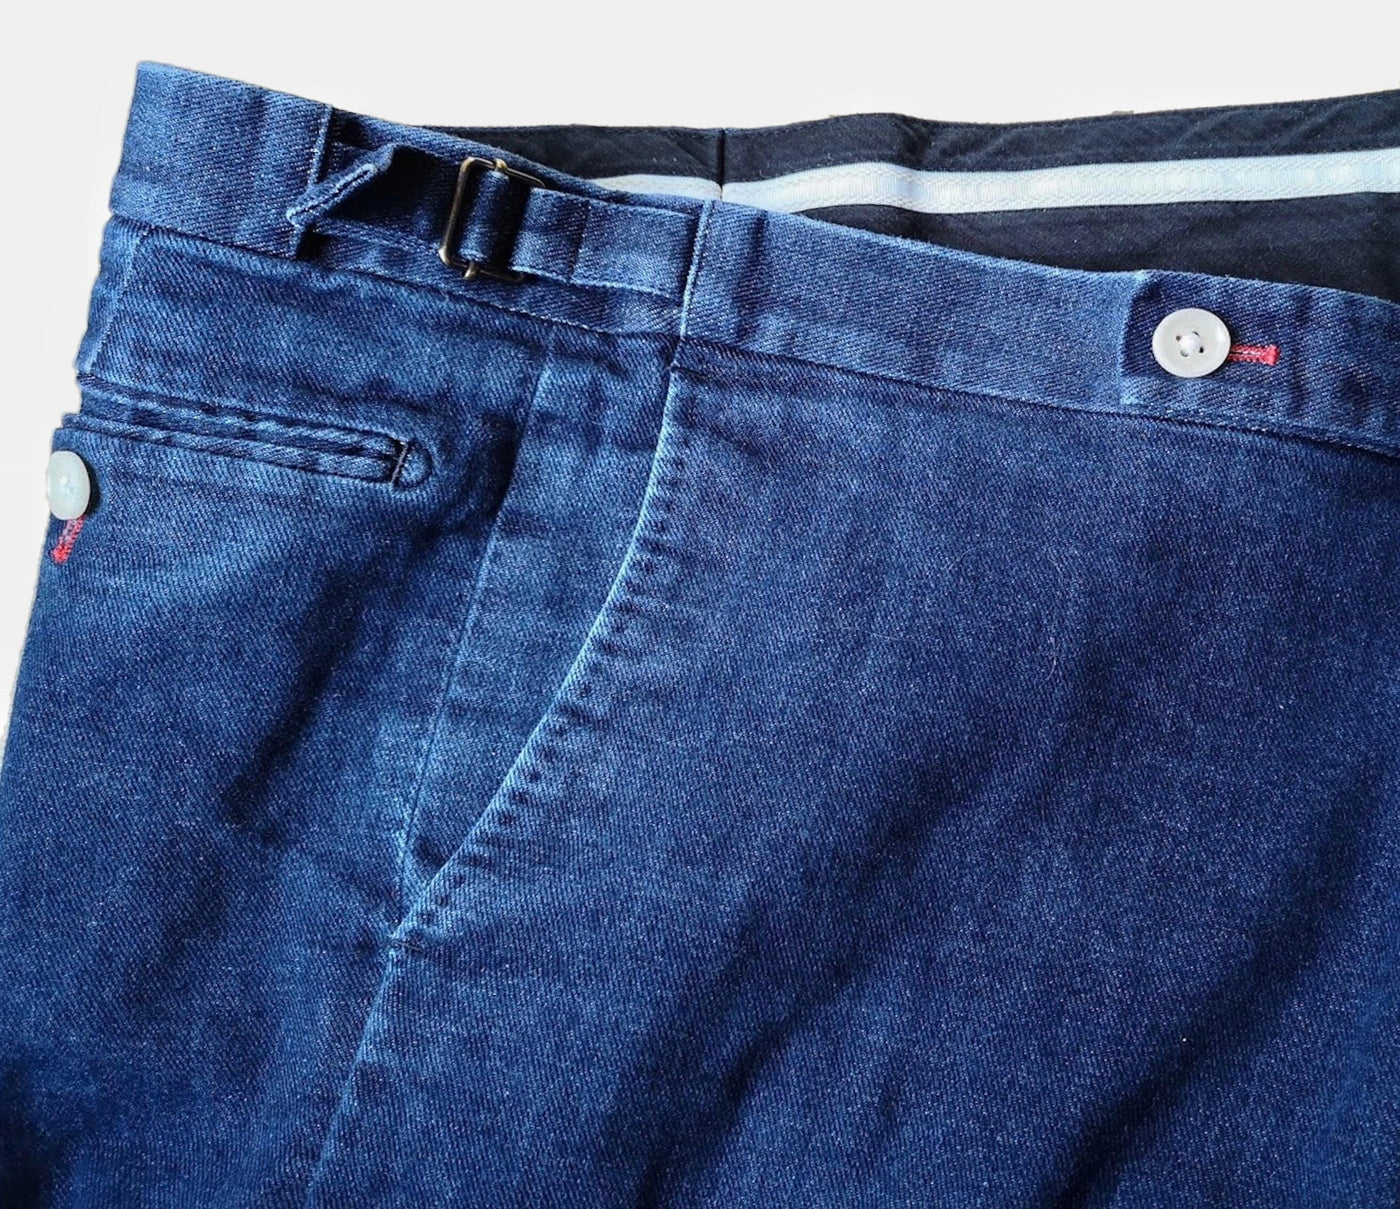 Blue Jeans 9 oz - Mark marengo